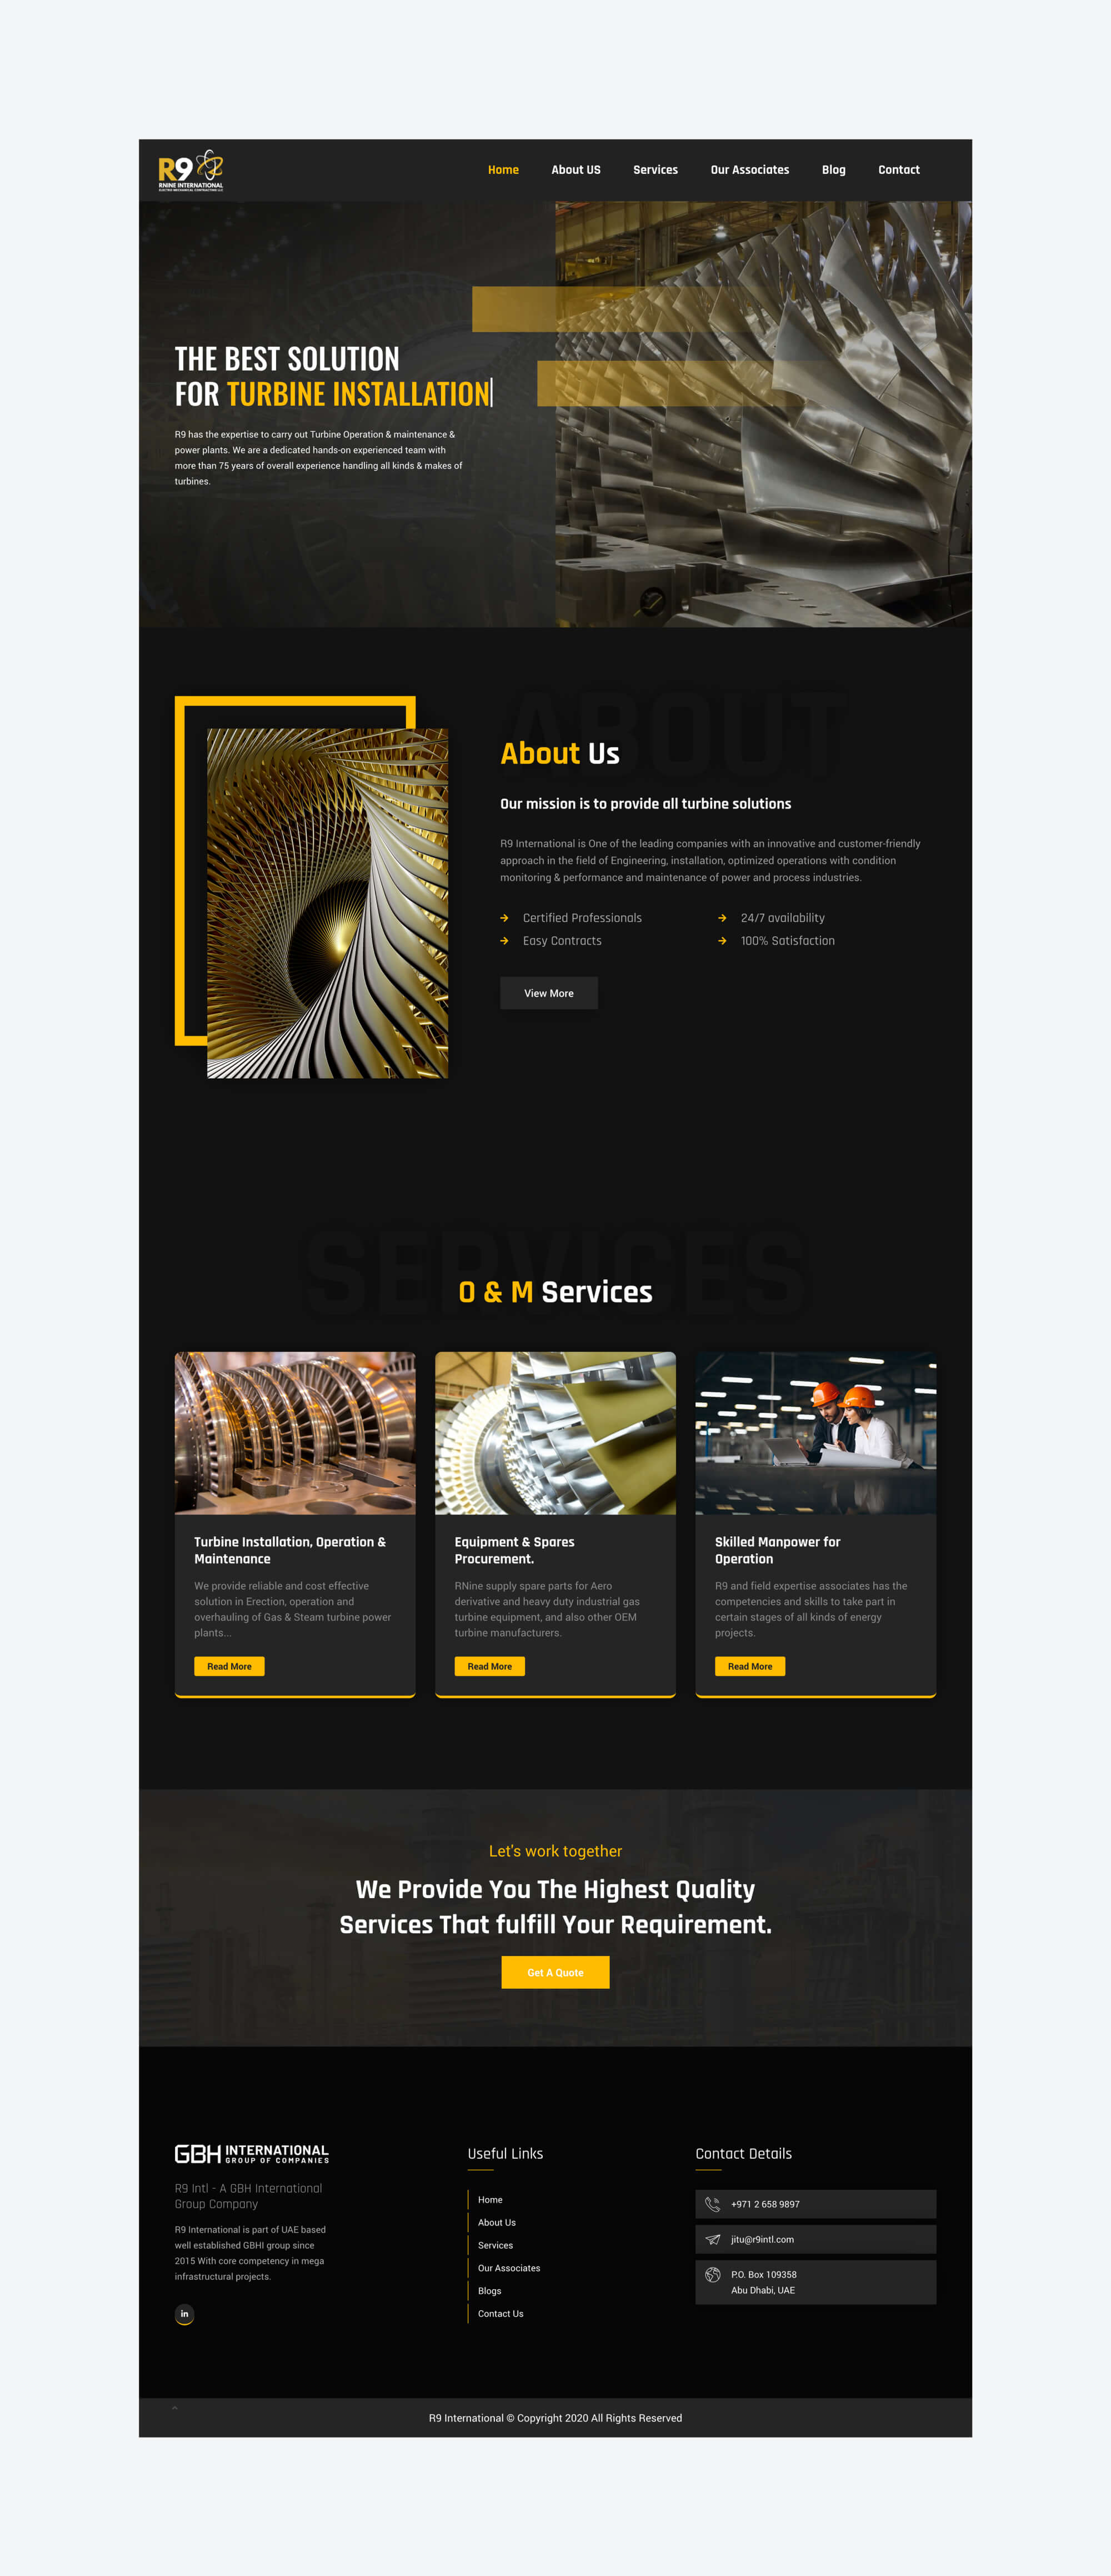 R9 Turbine website by freelance web designer Sajid Sulaiman